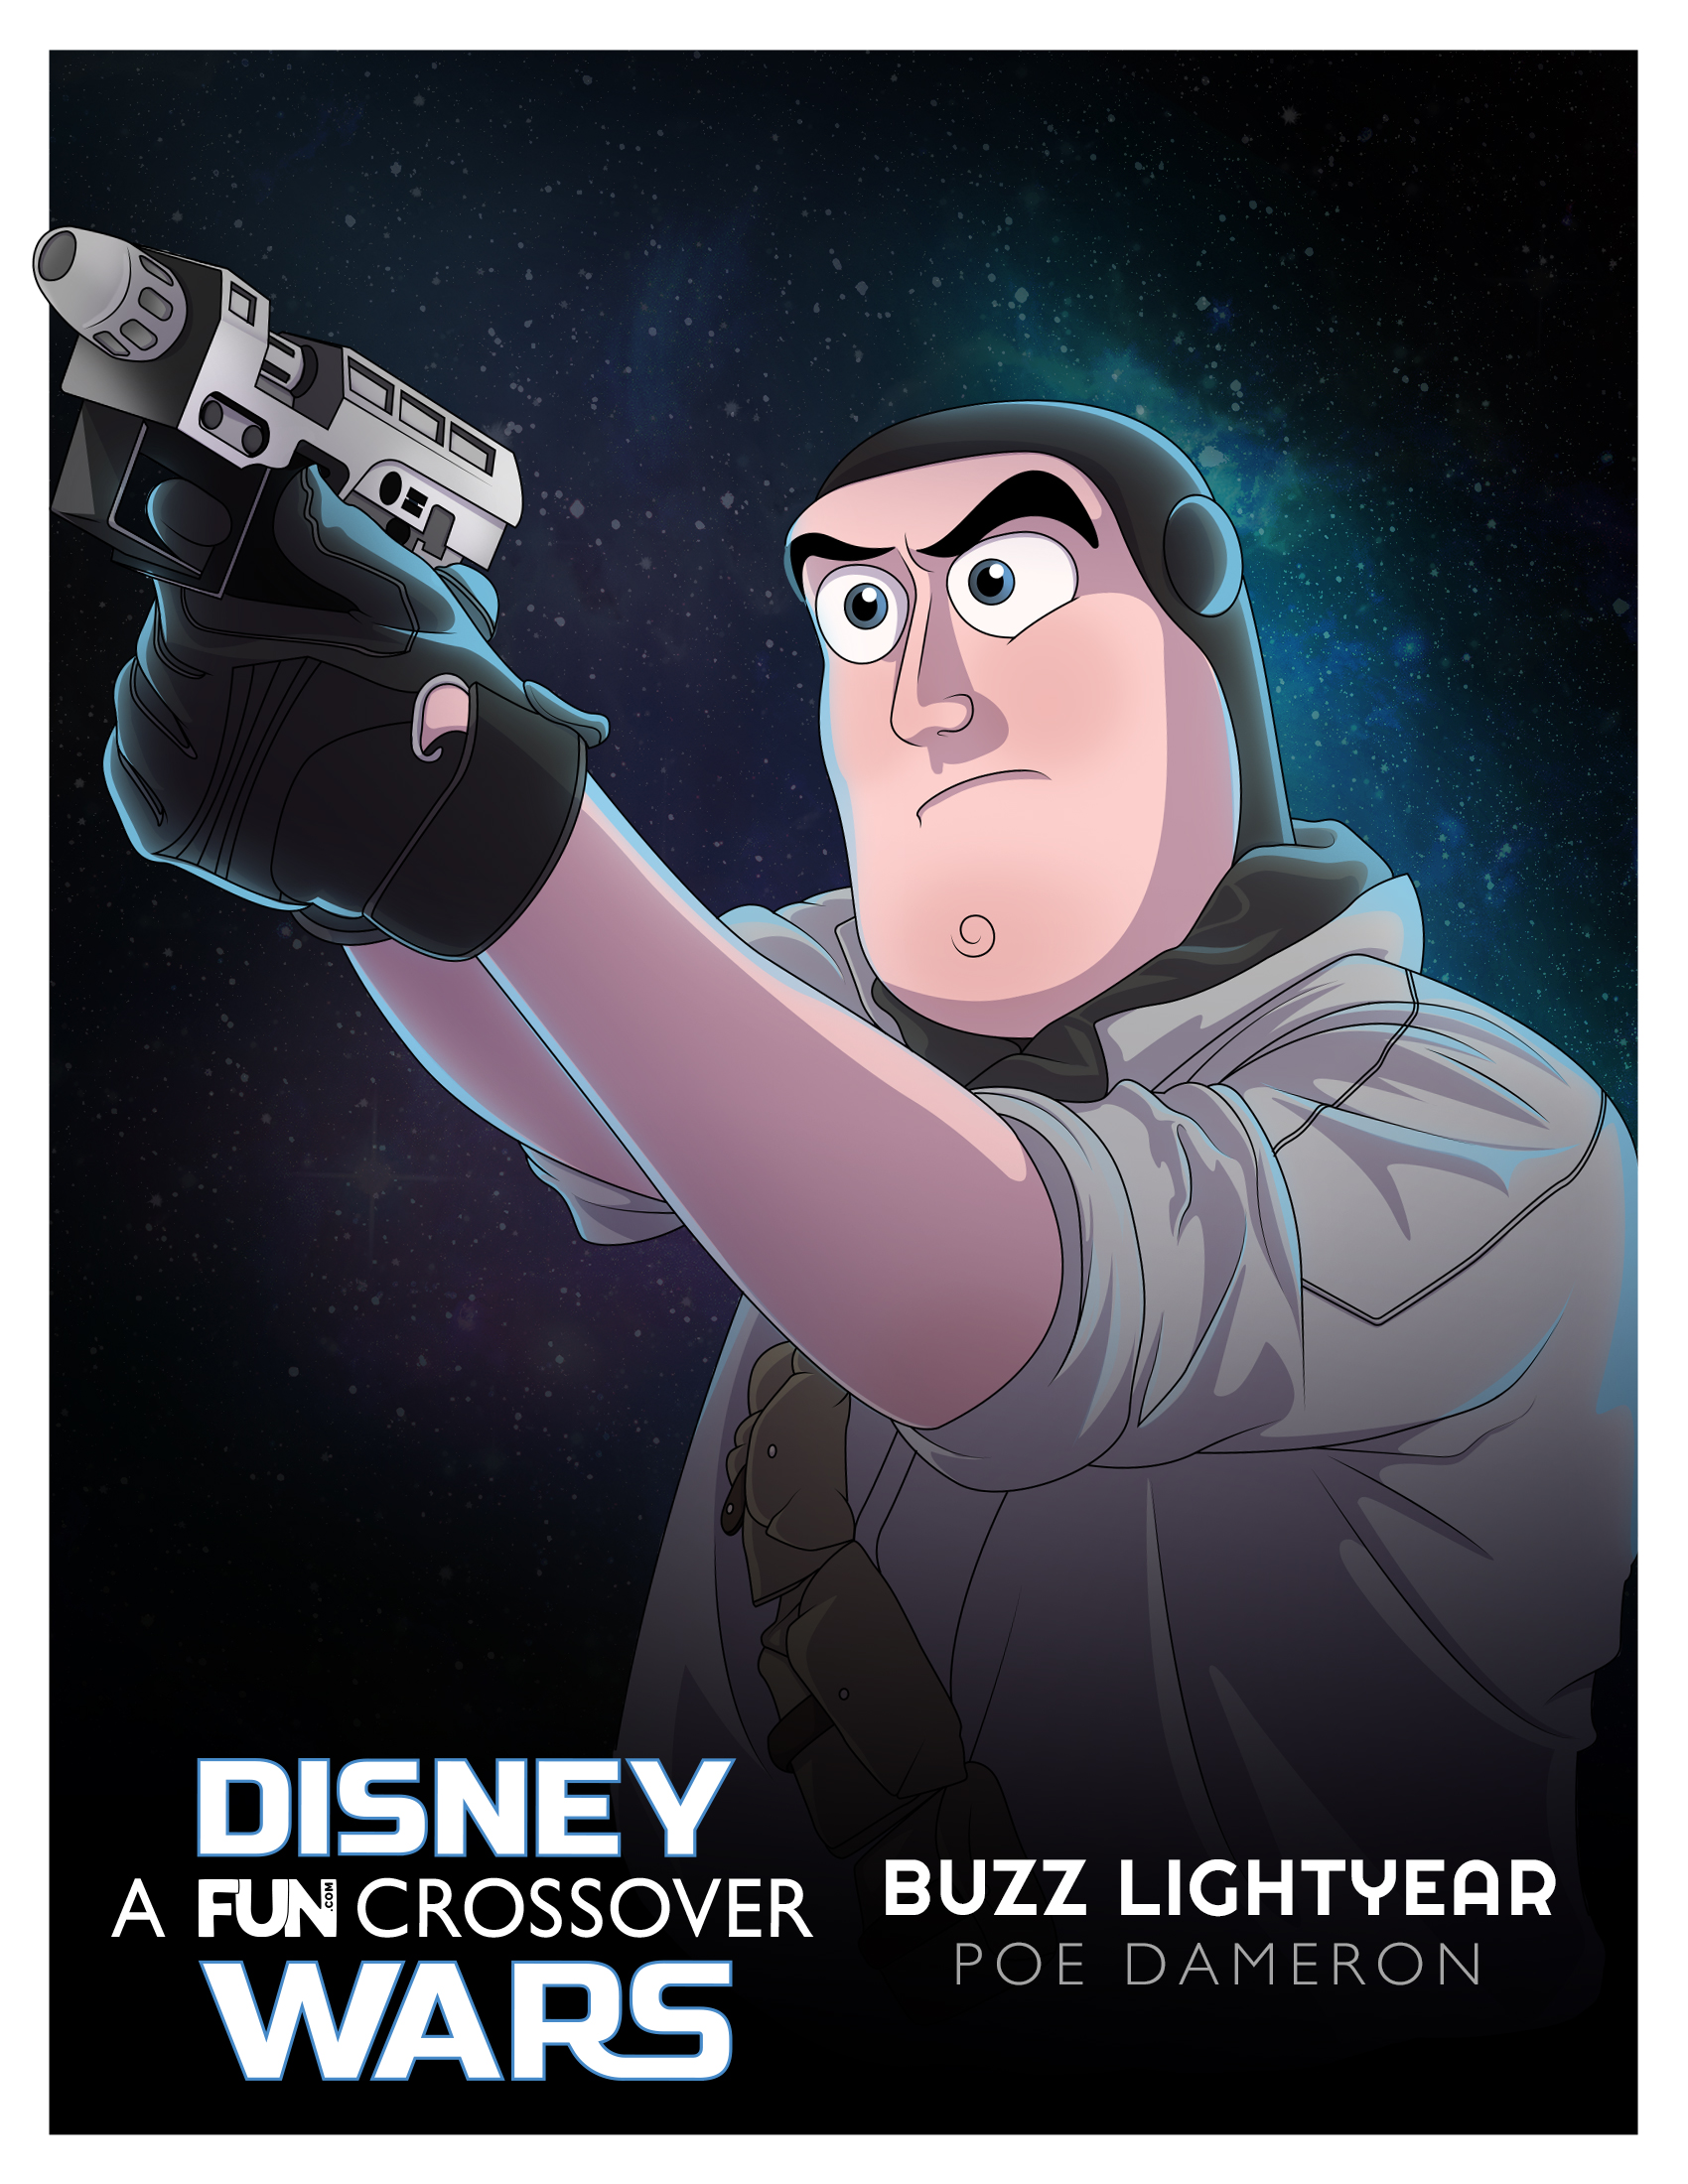 Disney Wars Buzz Lightyear Poe Dameron